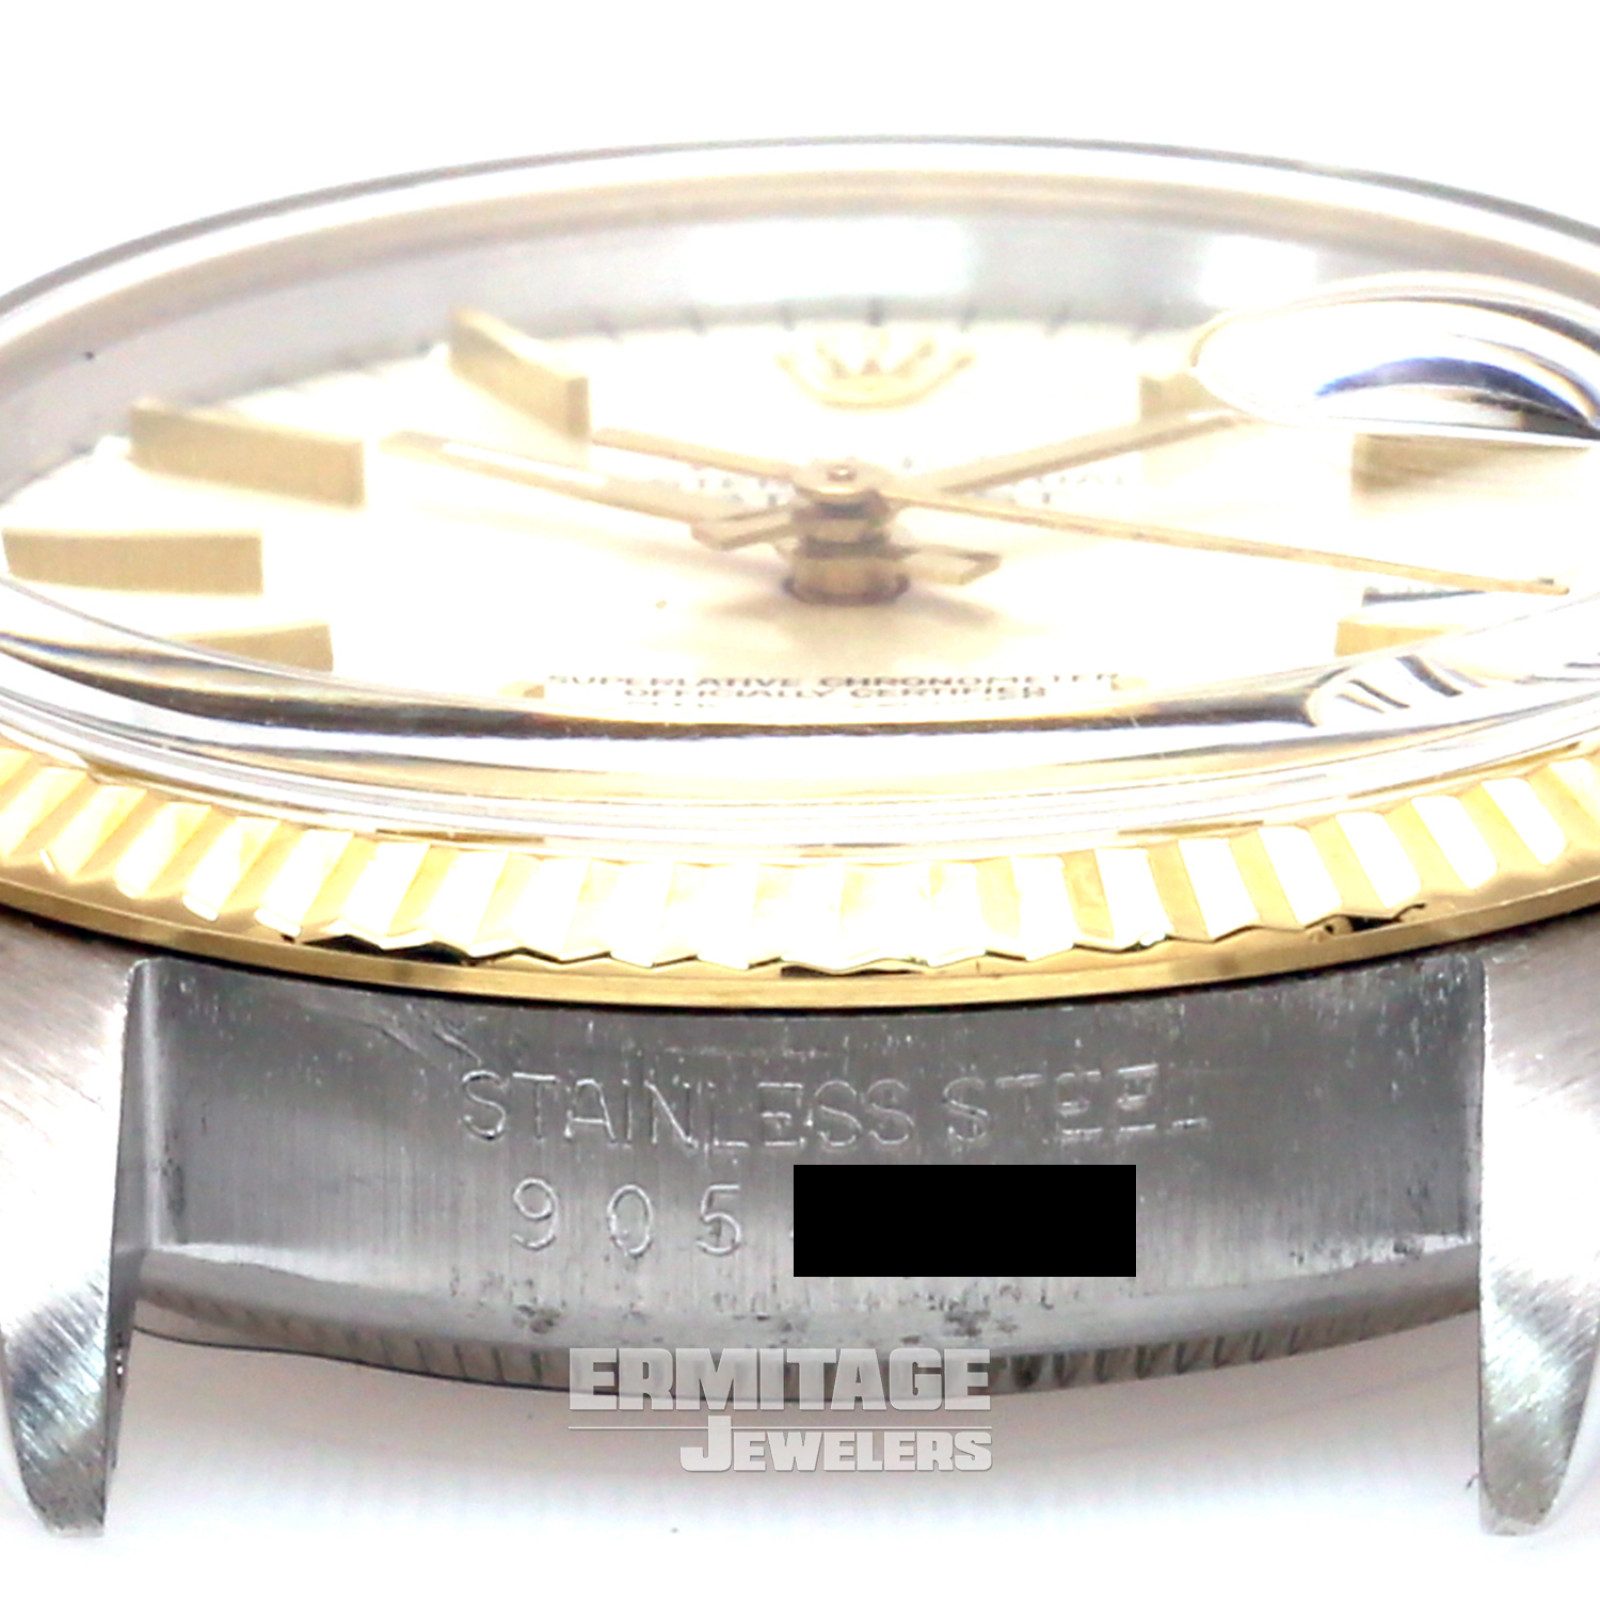 Used Gold & Steel on Jubilee Rolex Datejust 16013 36 mm